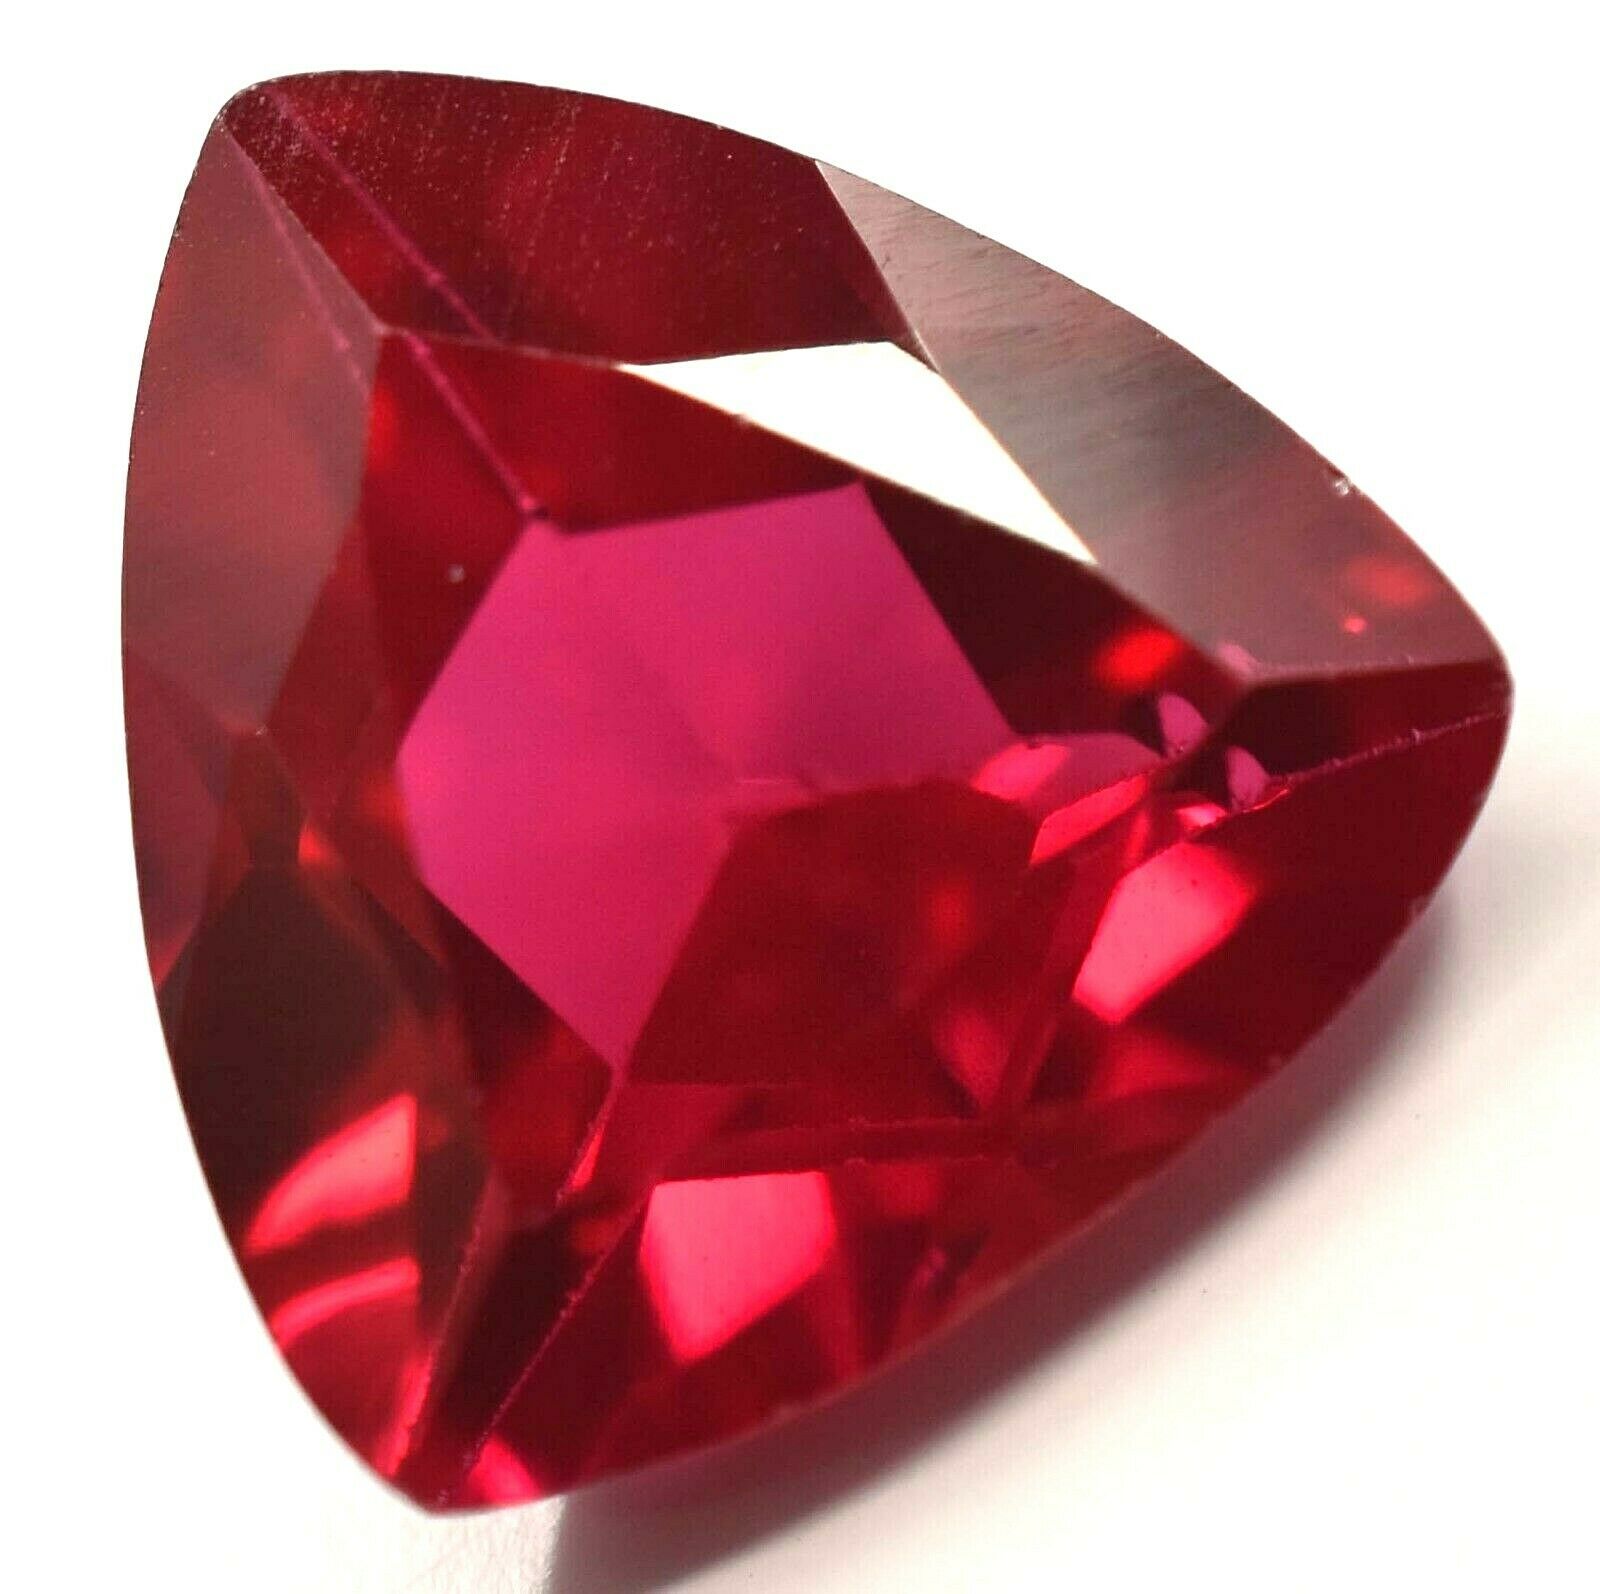 5.95 Ct Natural Red Color Almandine Garnet Trillion Cut Gemstone Agsl Certified